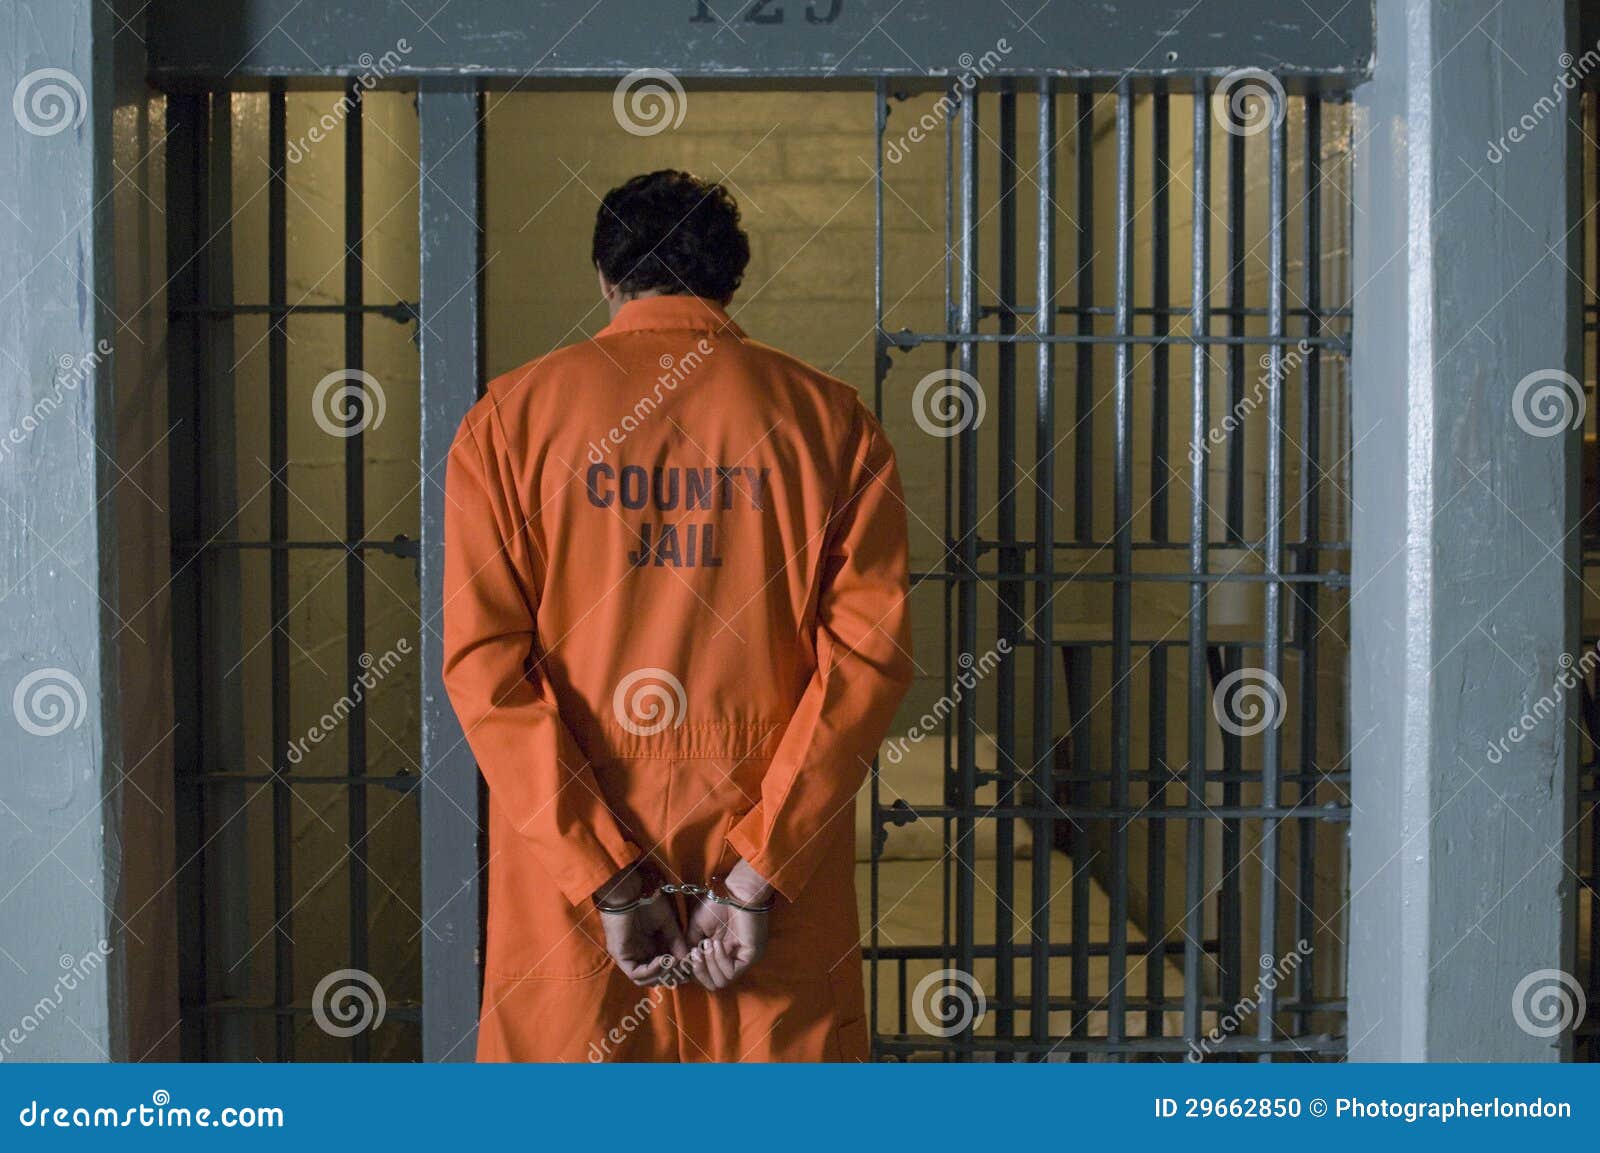 handcuffed prisoner in jail